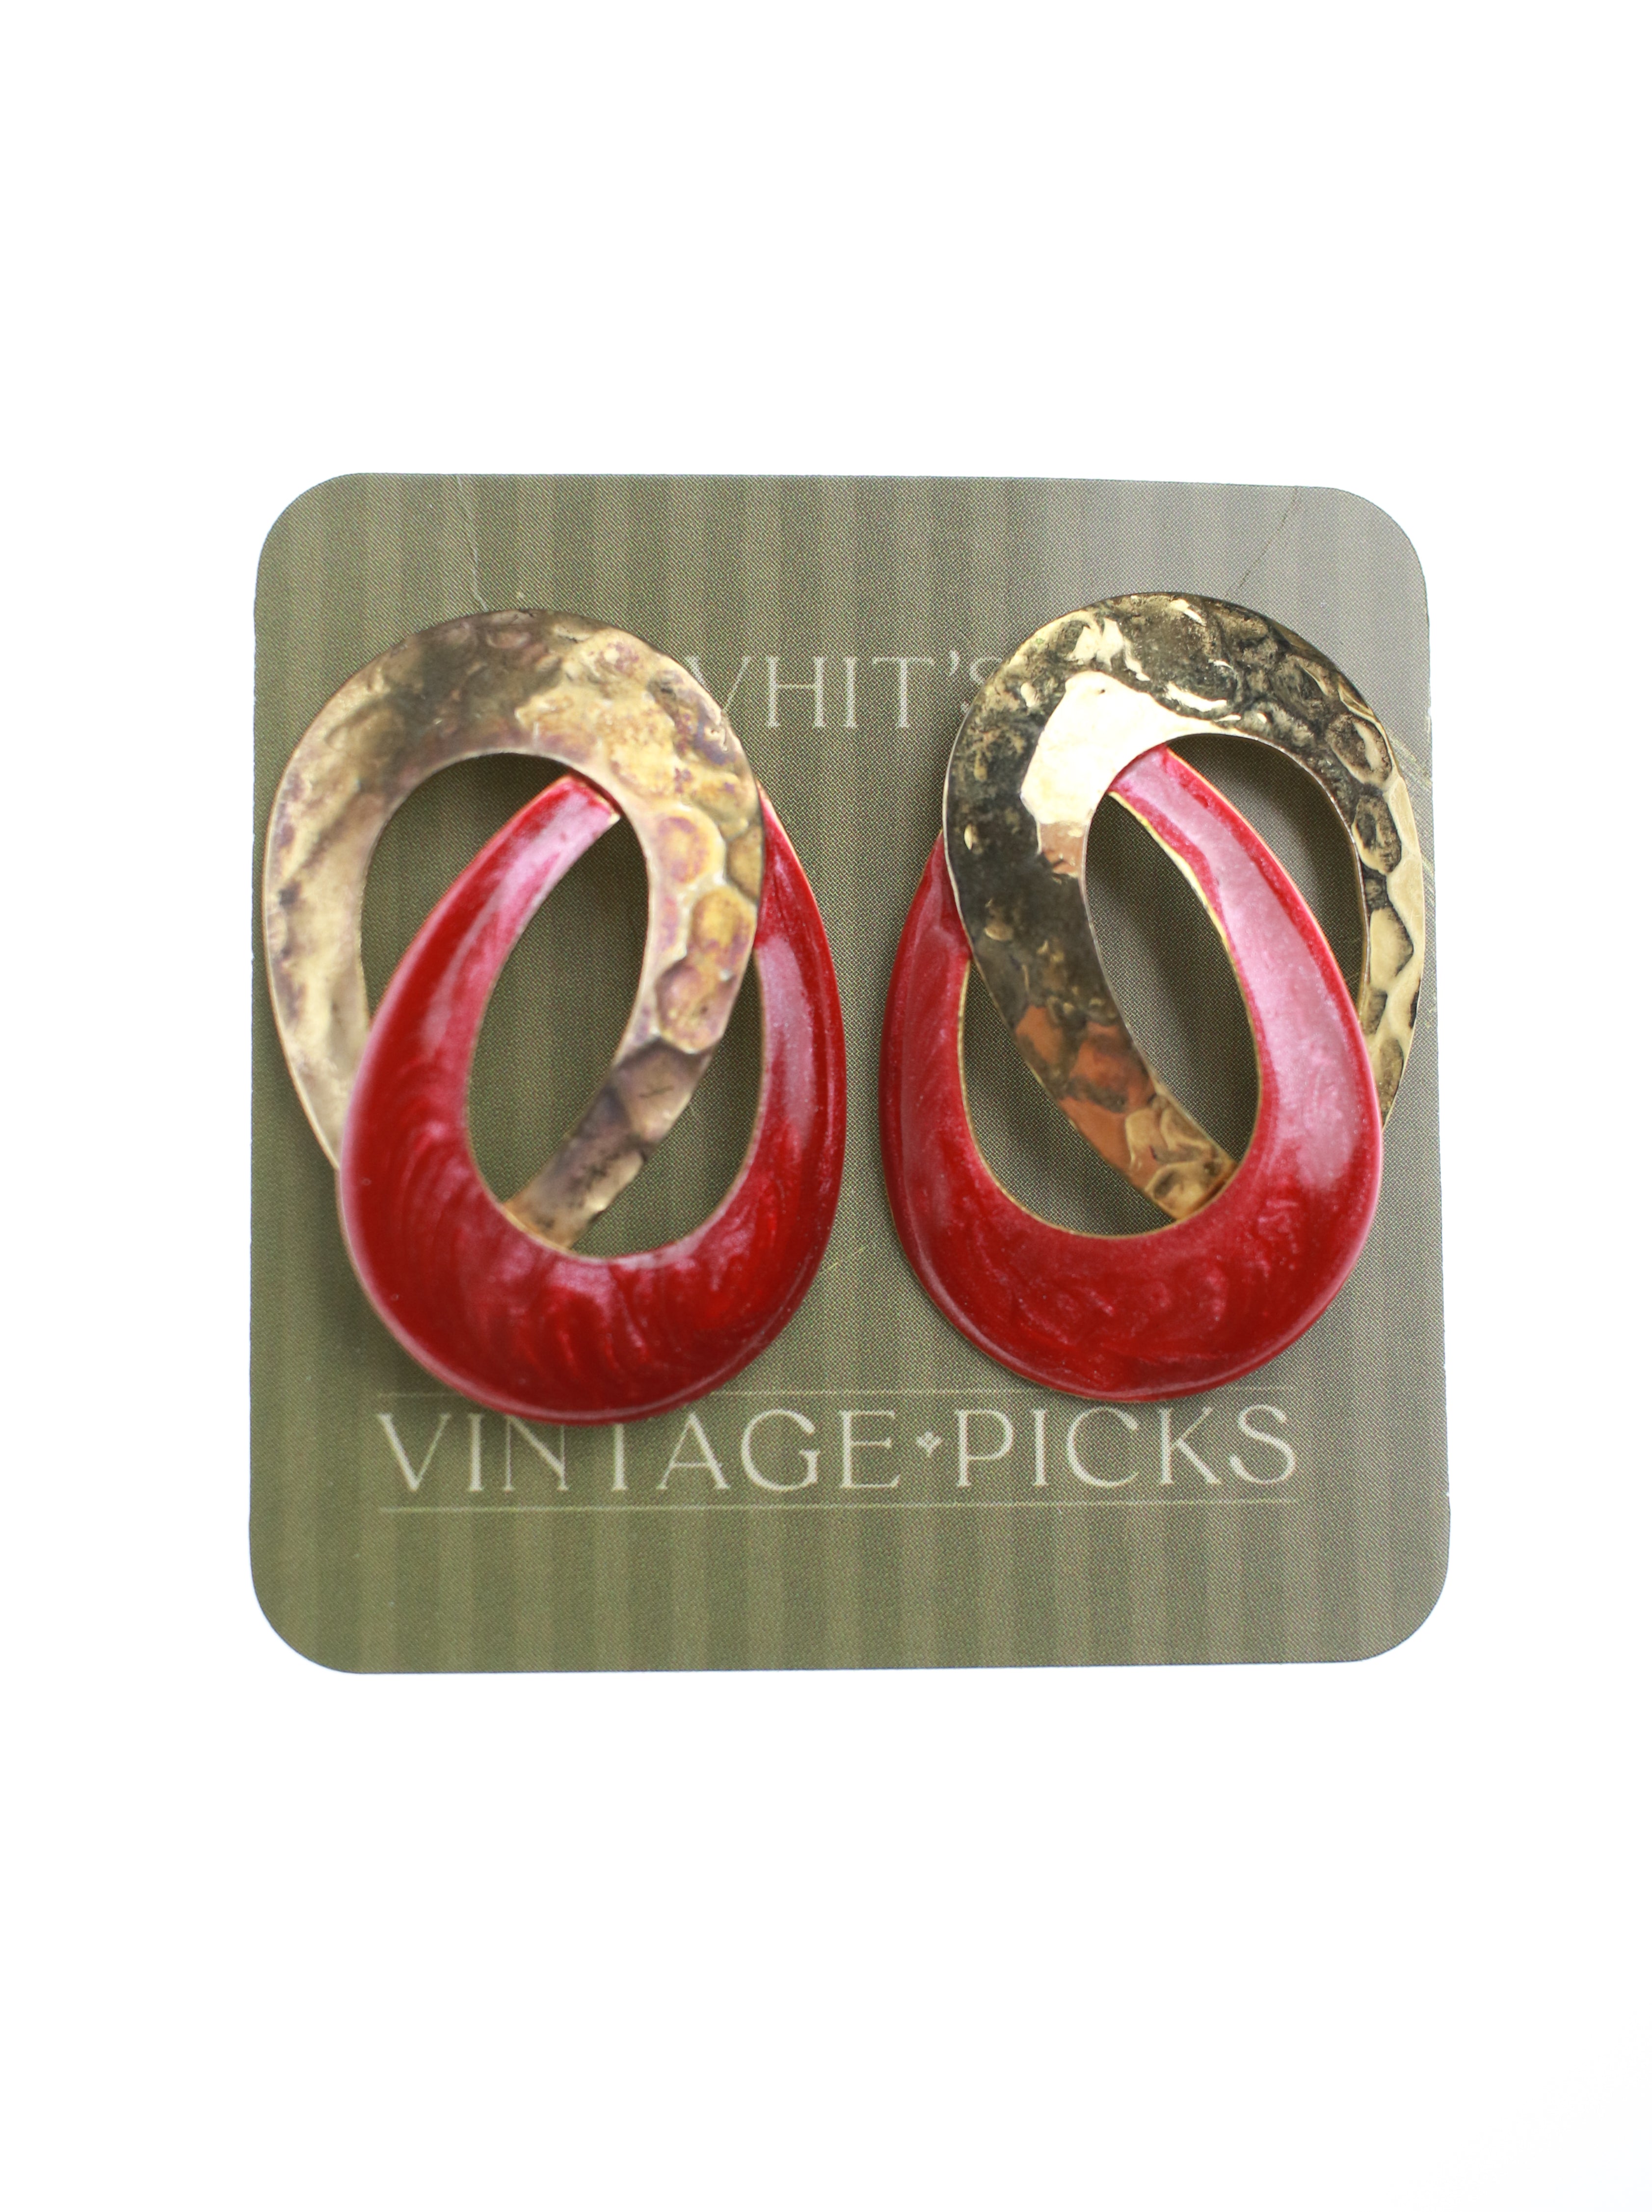 Whit's Vintage Picks- Earrings 44